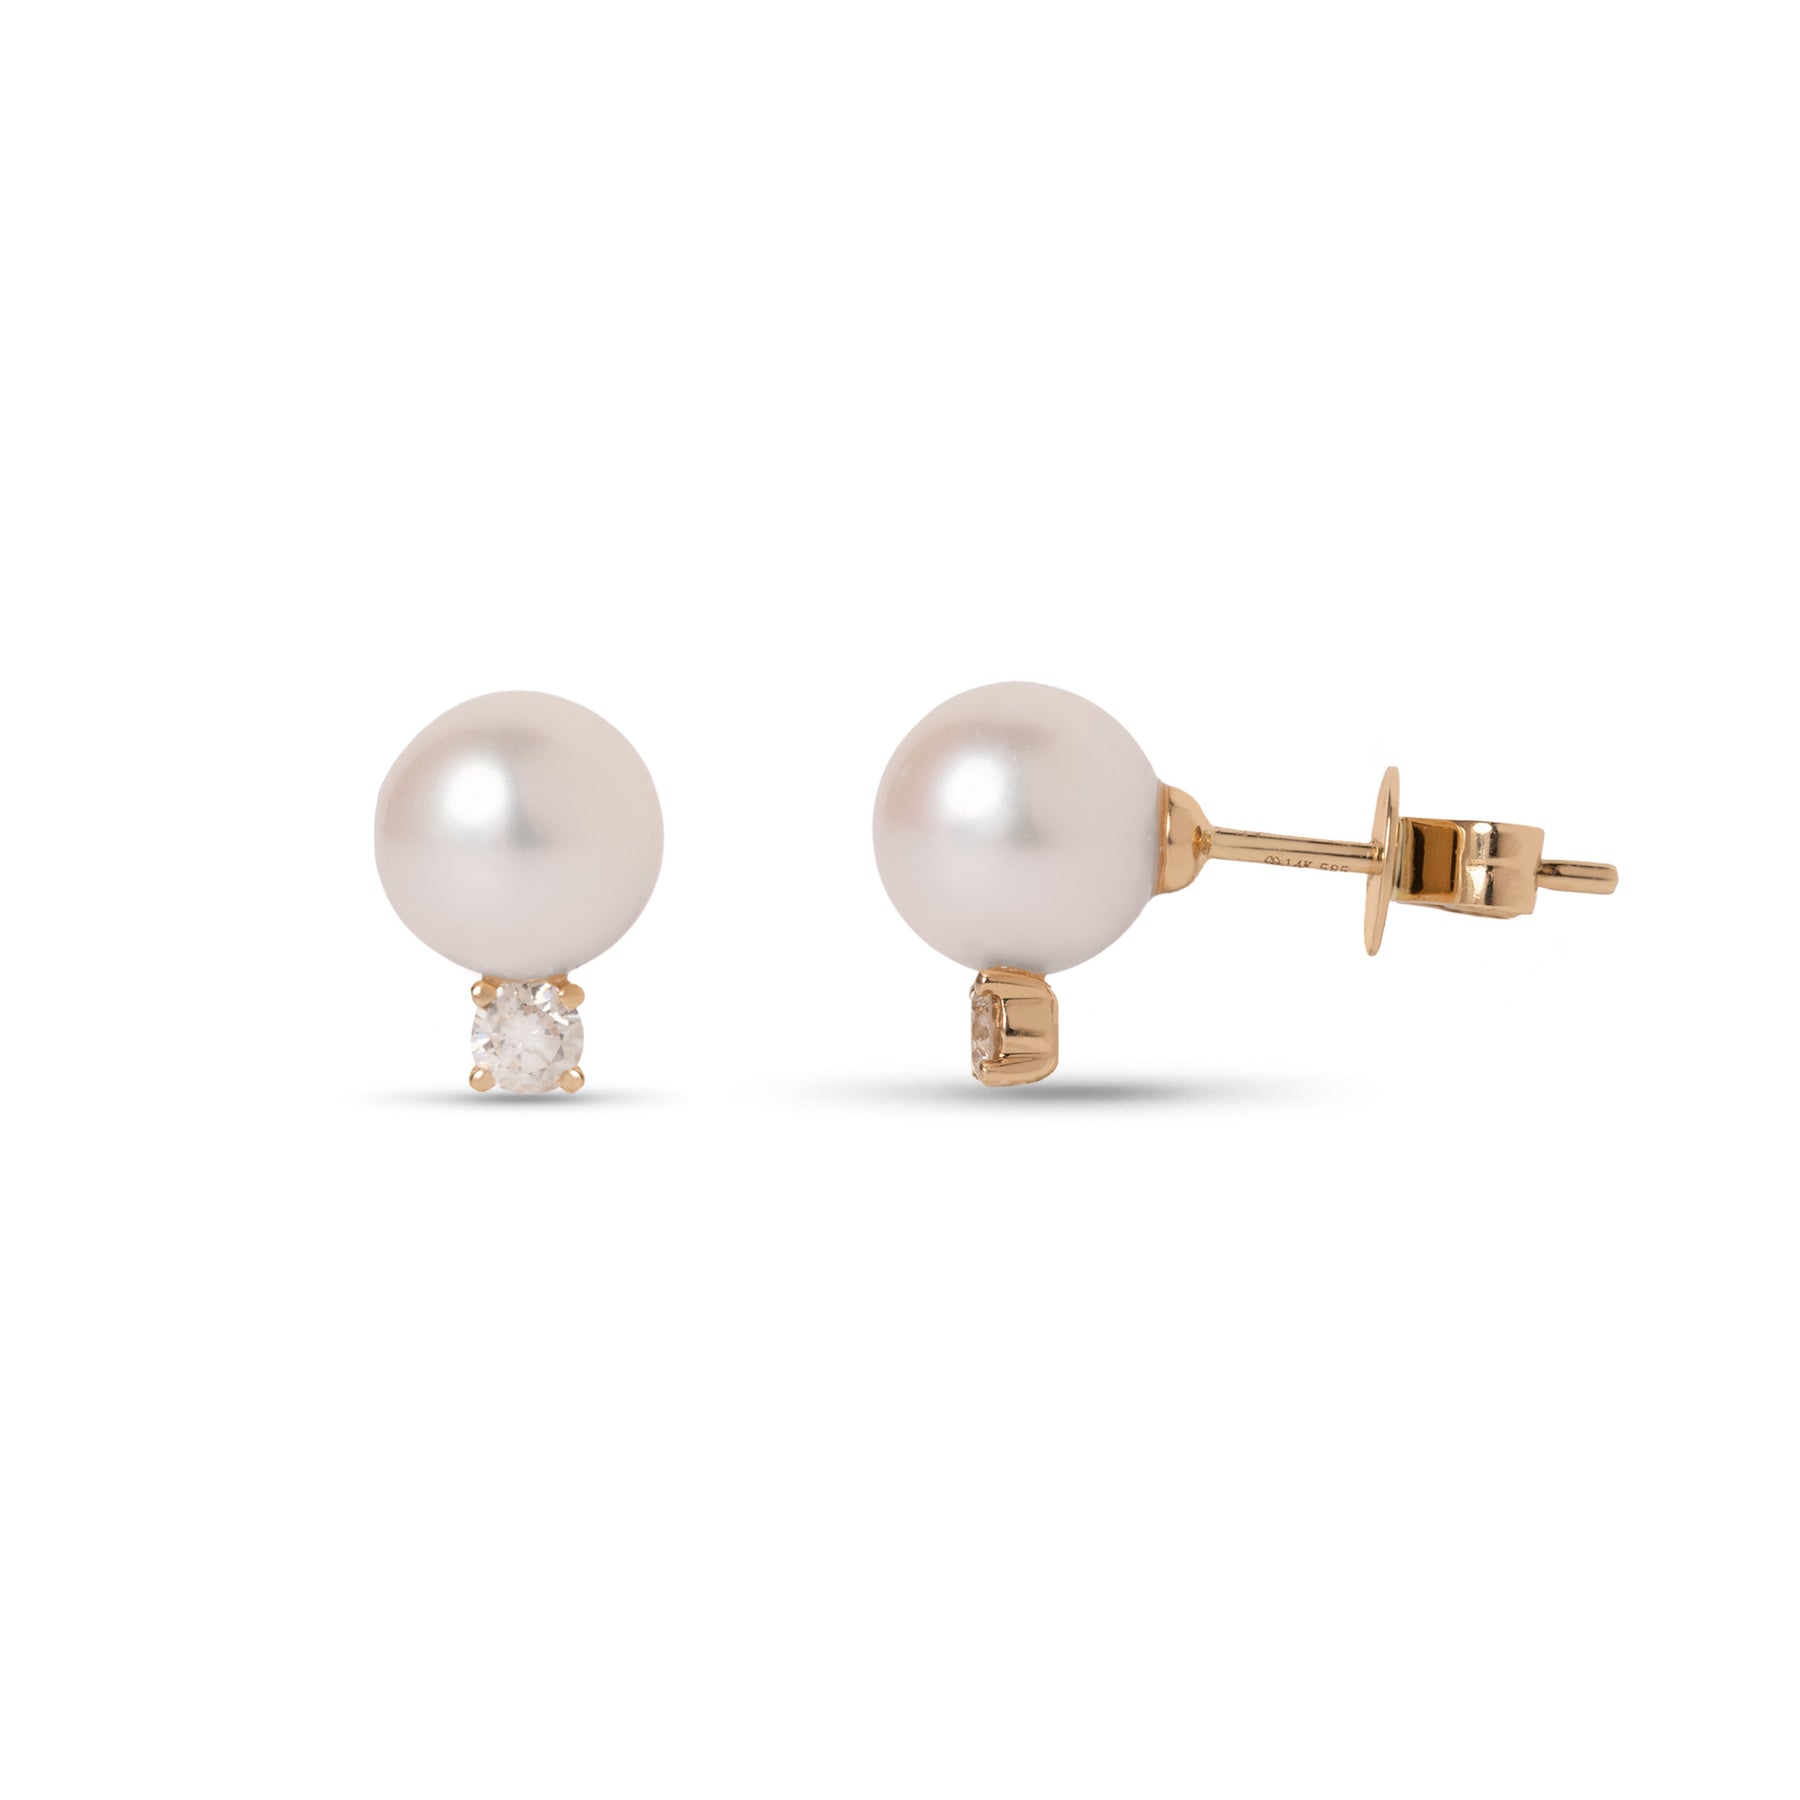 14k yellow gold pearl and diamond stud earrings